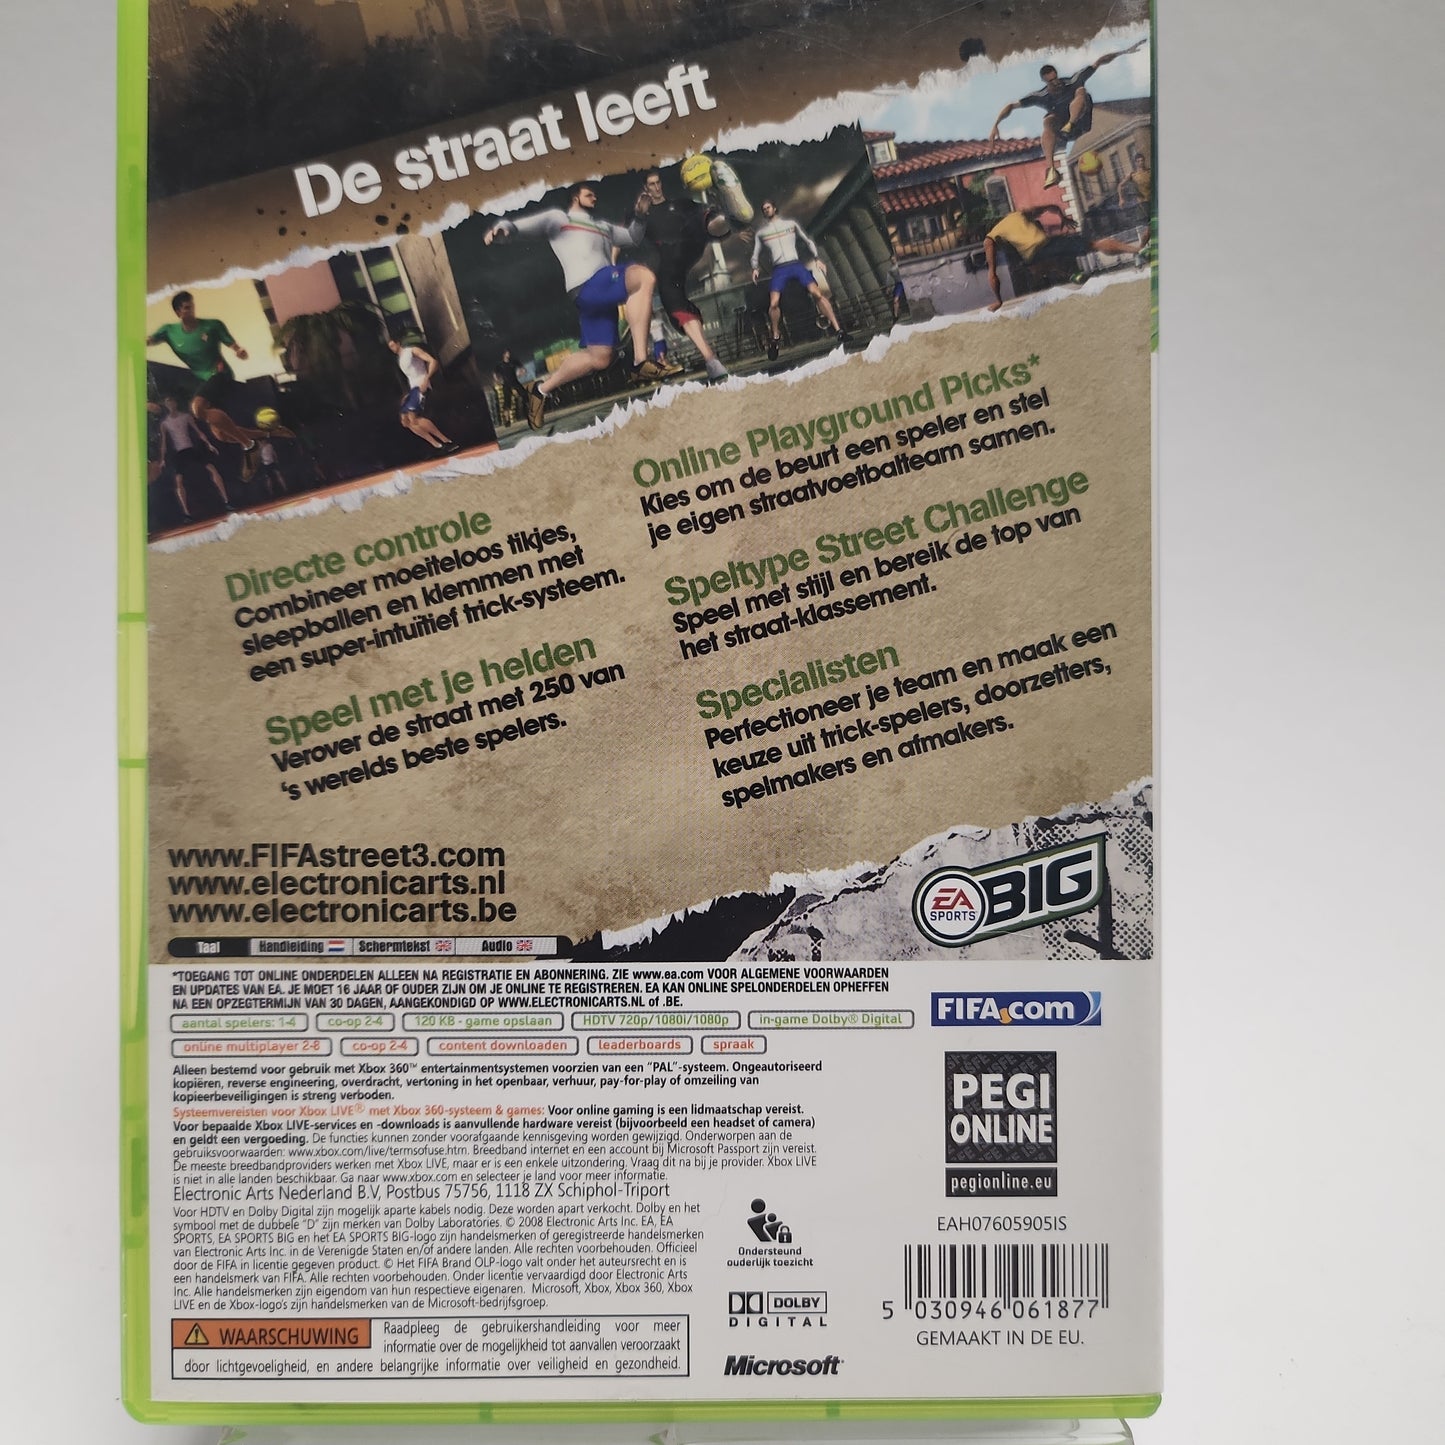 FIFA Street 3 Xbox 360